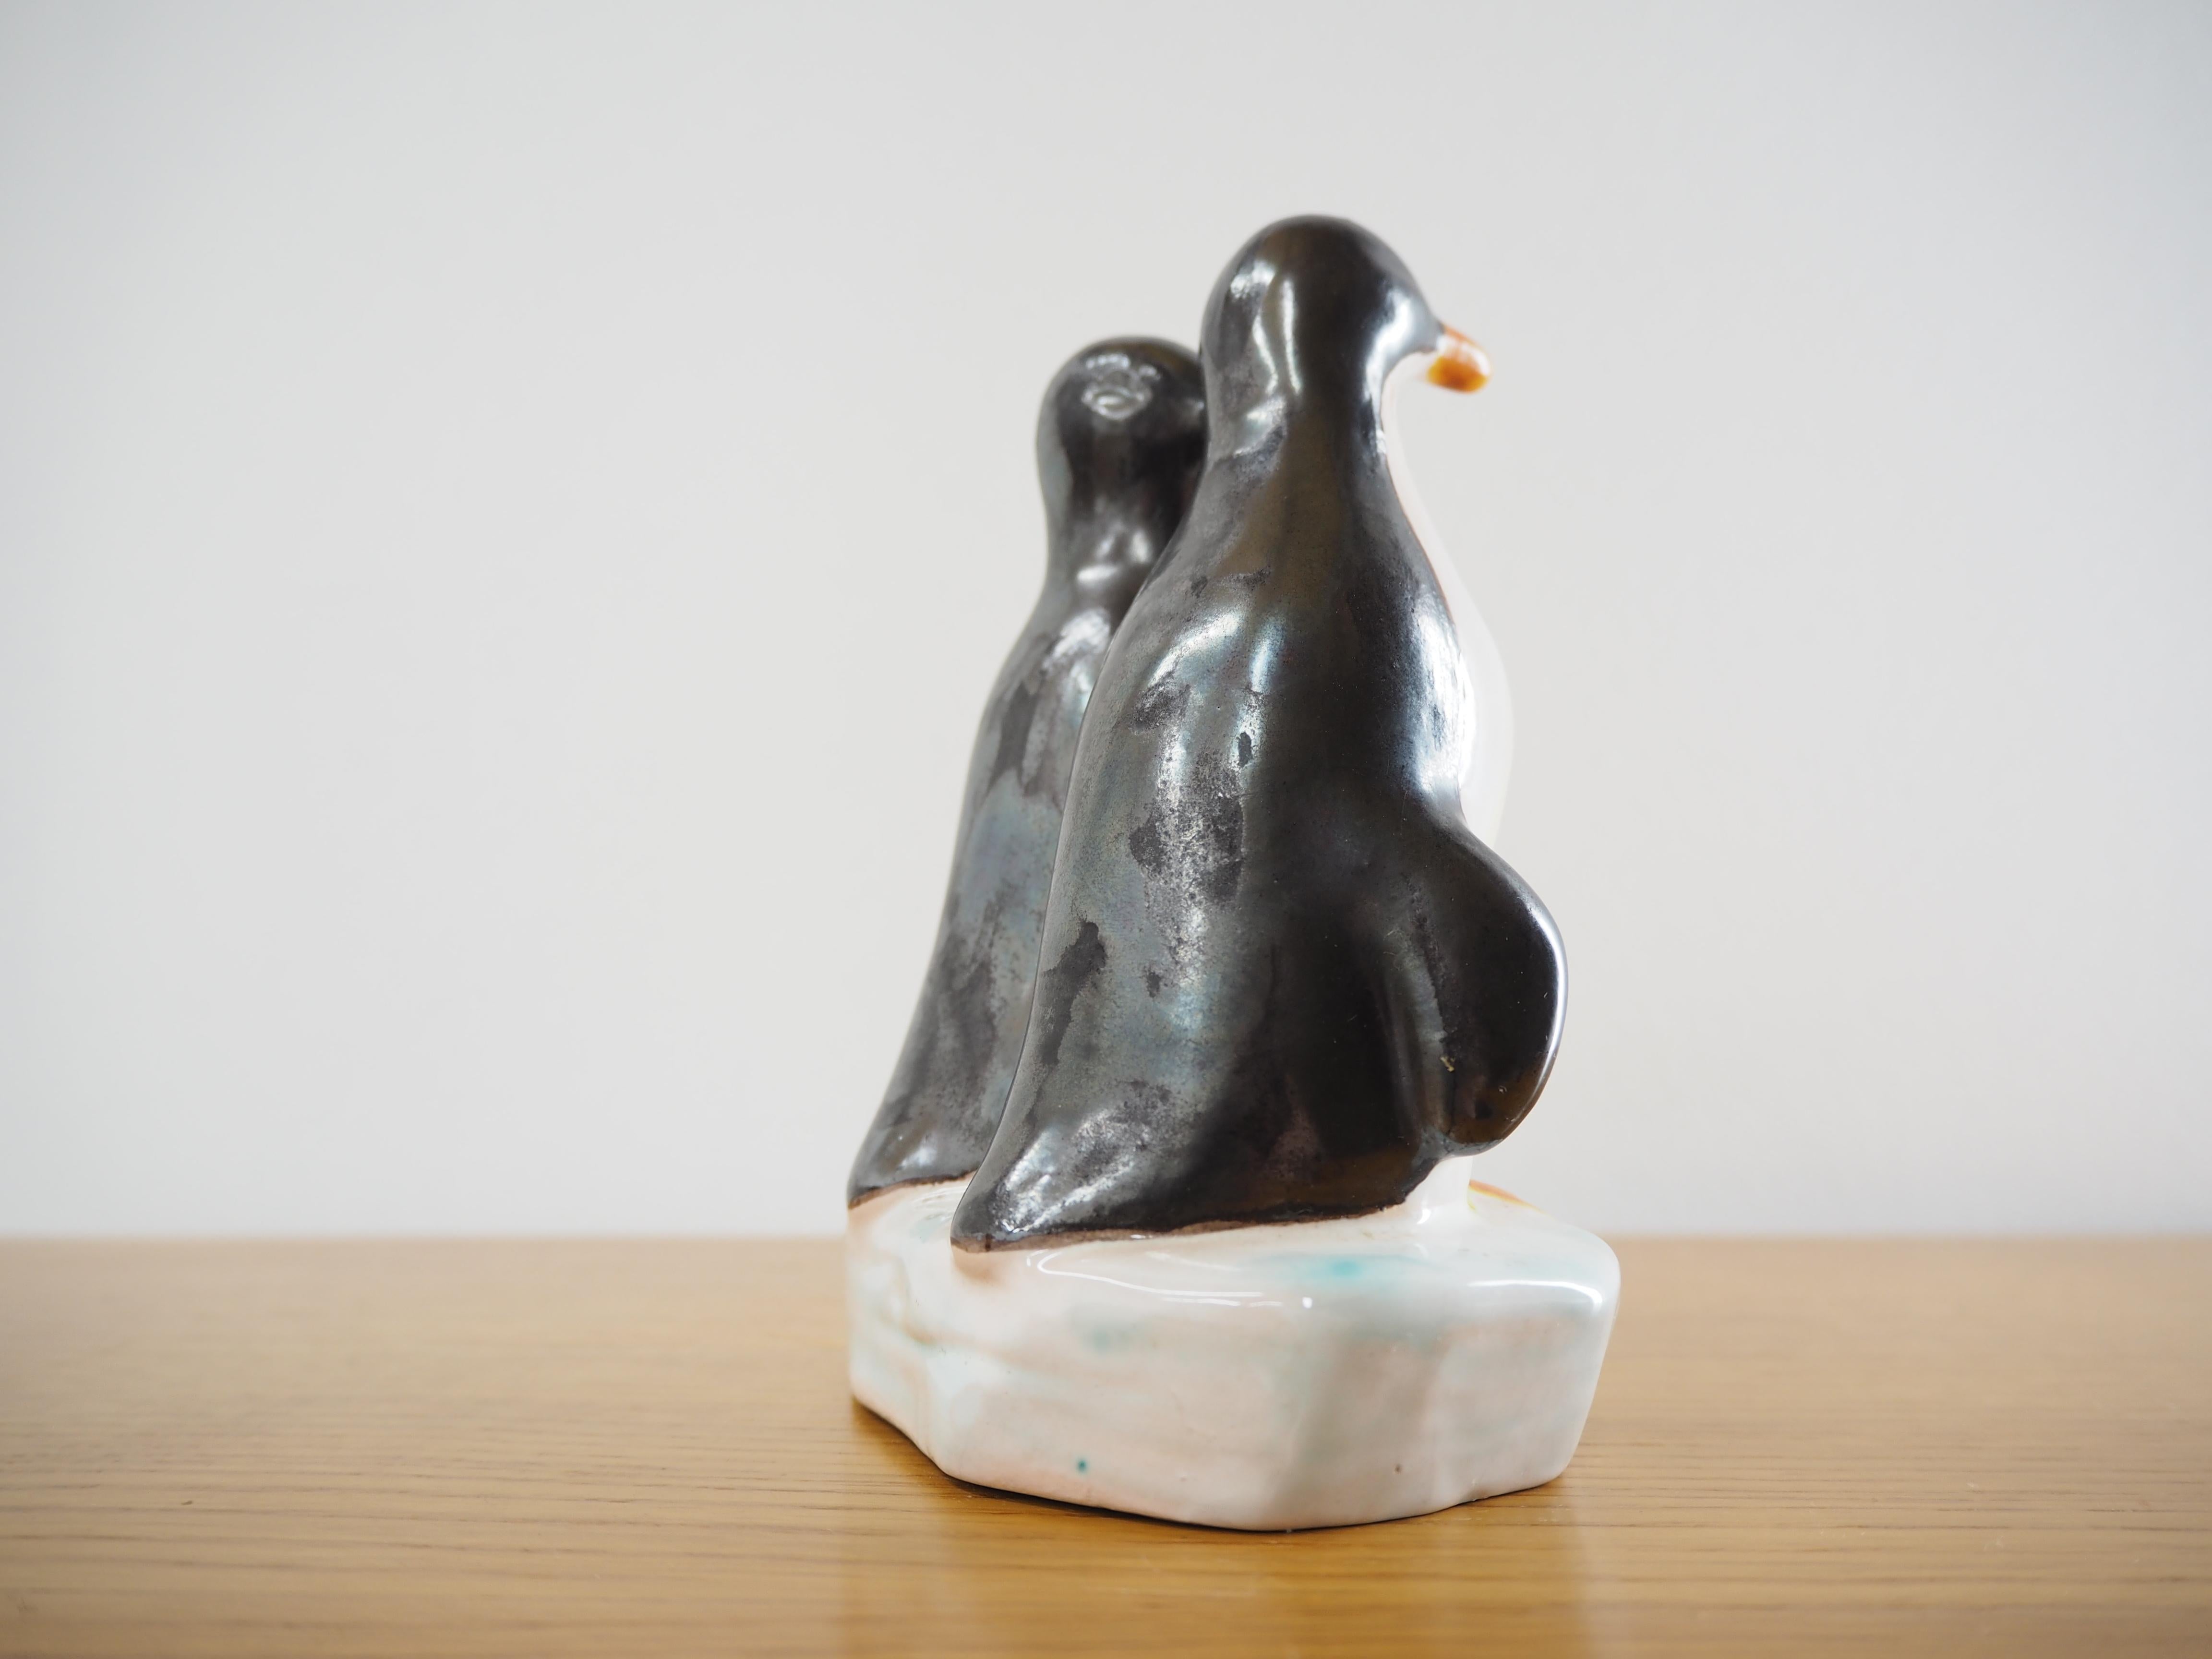 Ceramic Midcentury Sculpture of Penguins, Jihokera, Czechoslovakia, 1940s